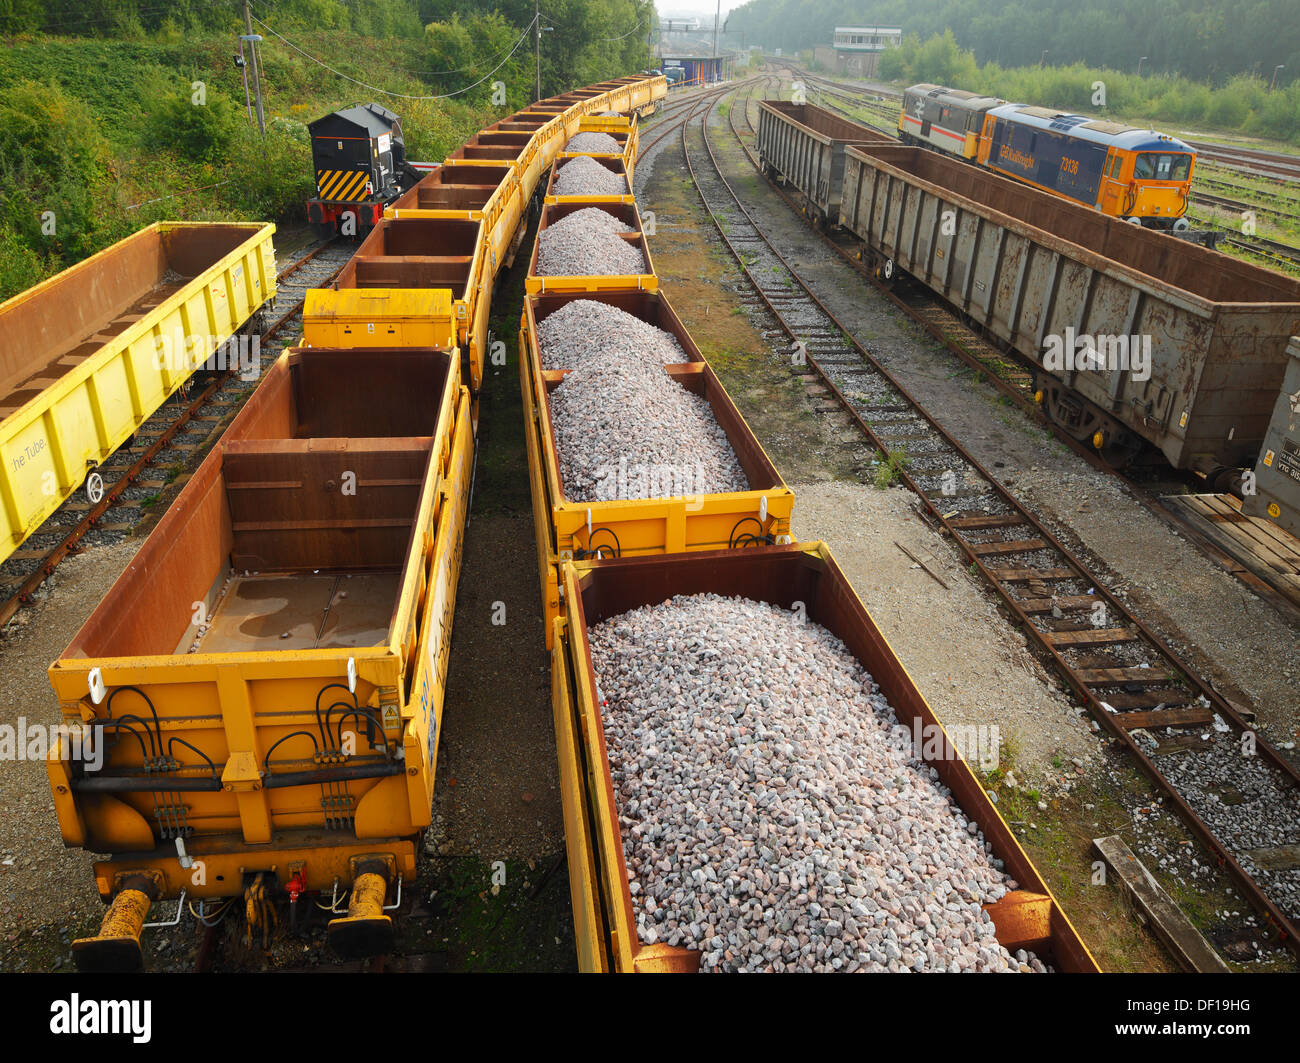 Patio de mercancías por ferrocarril. Foto de stock